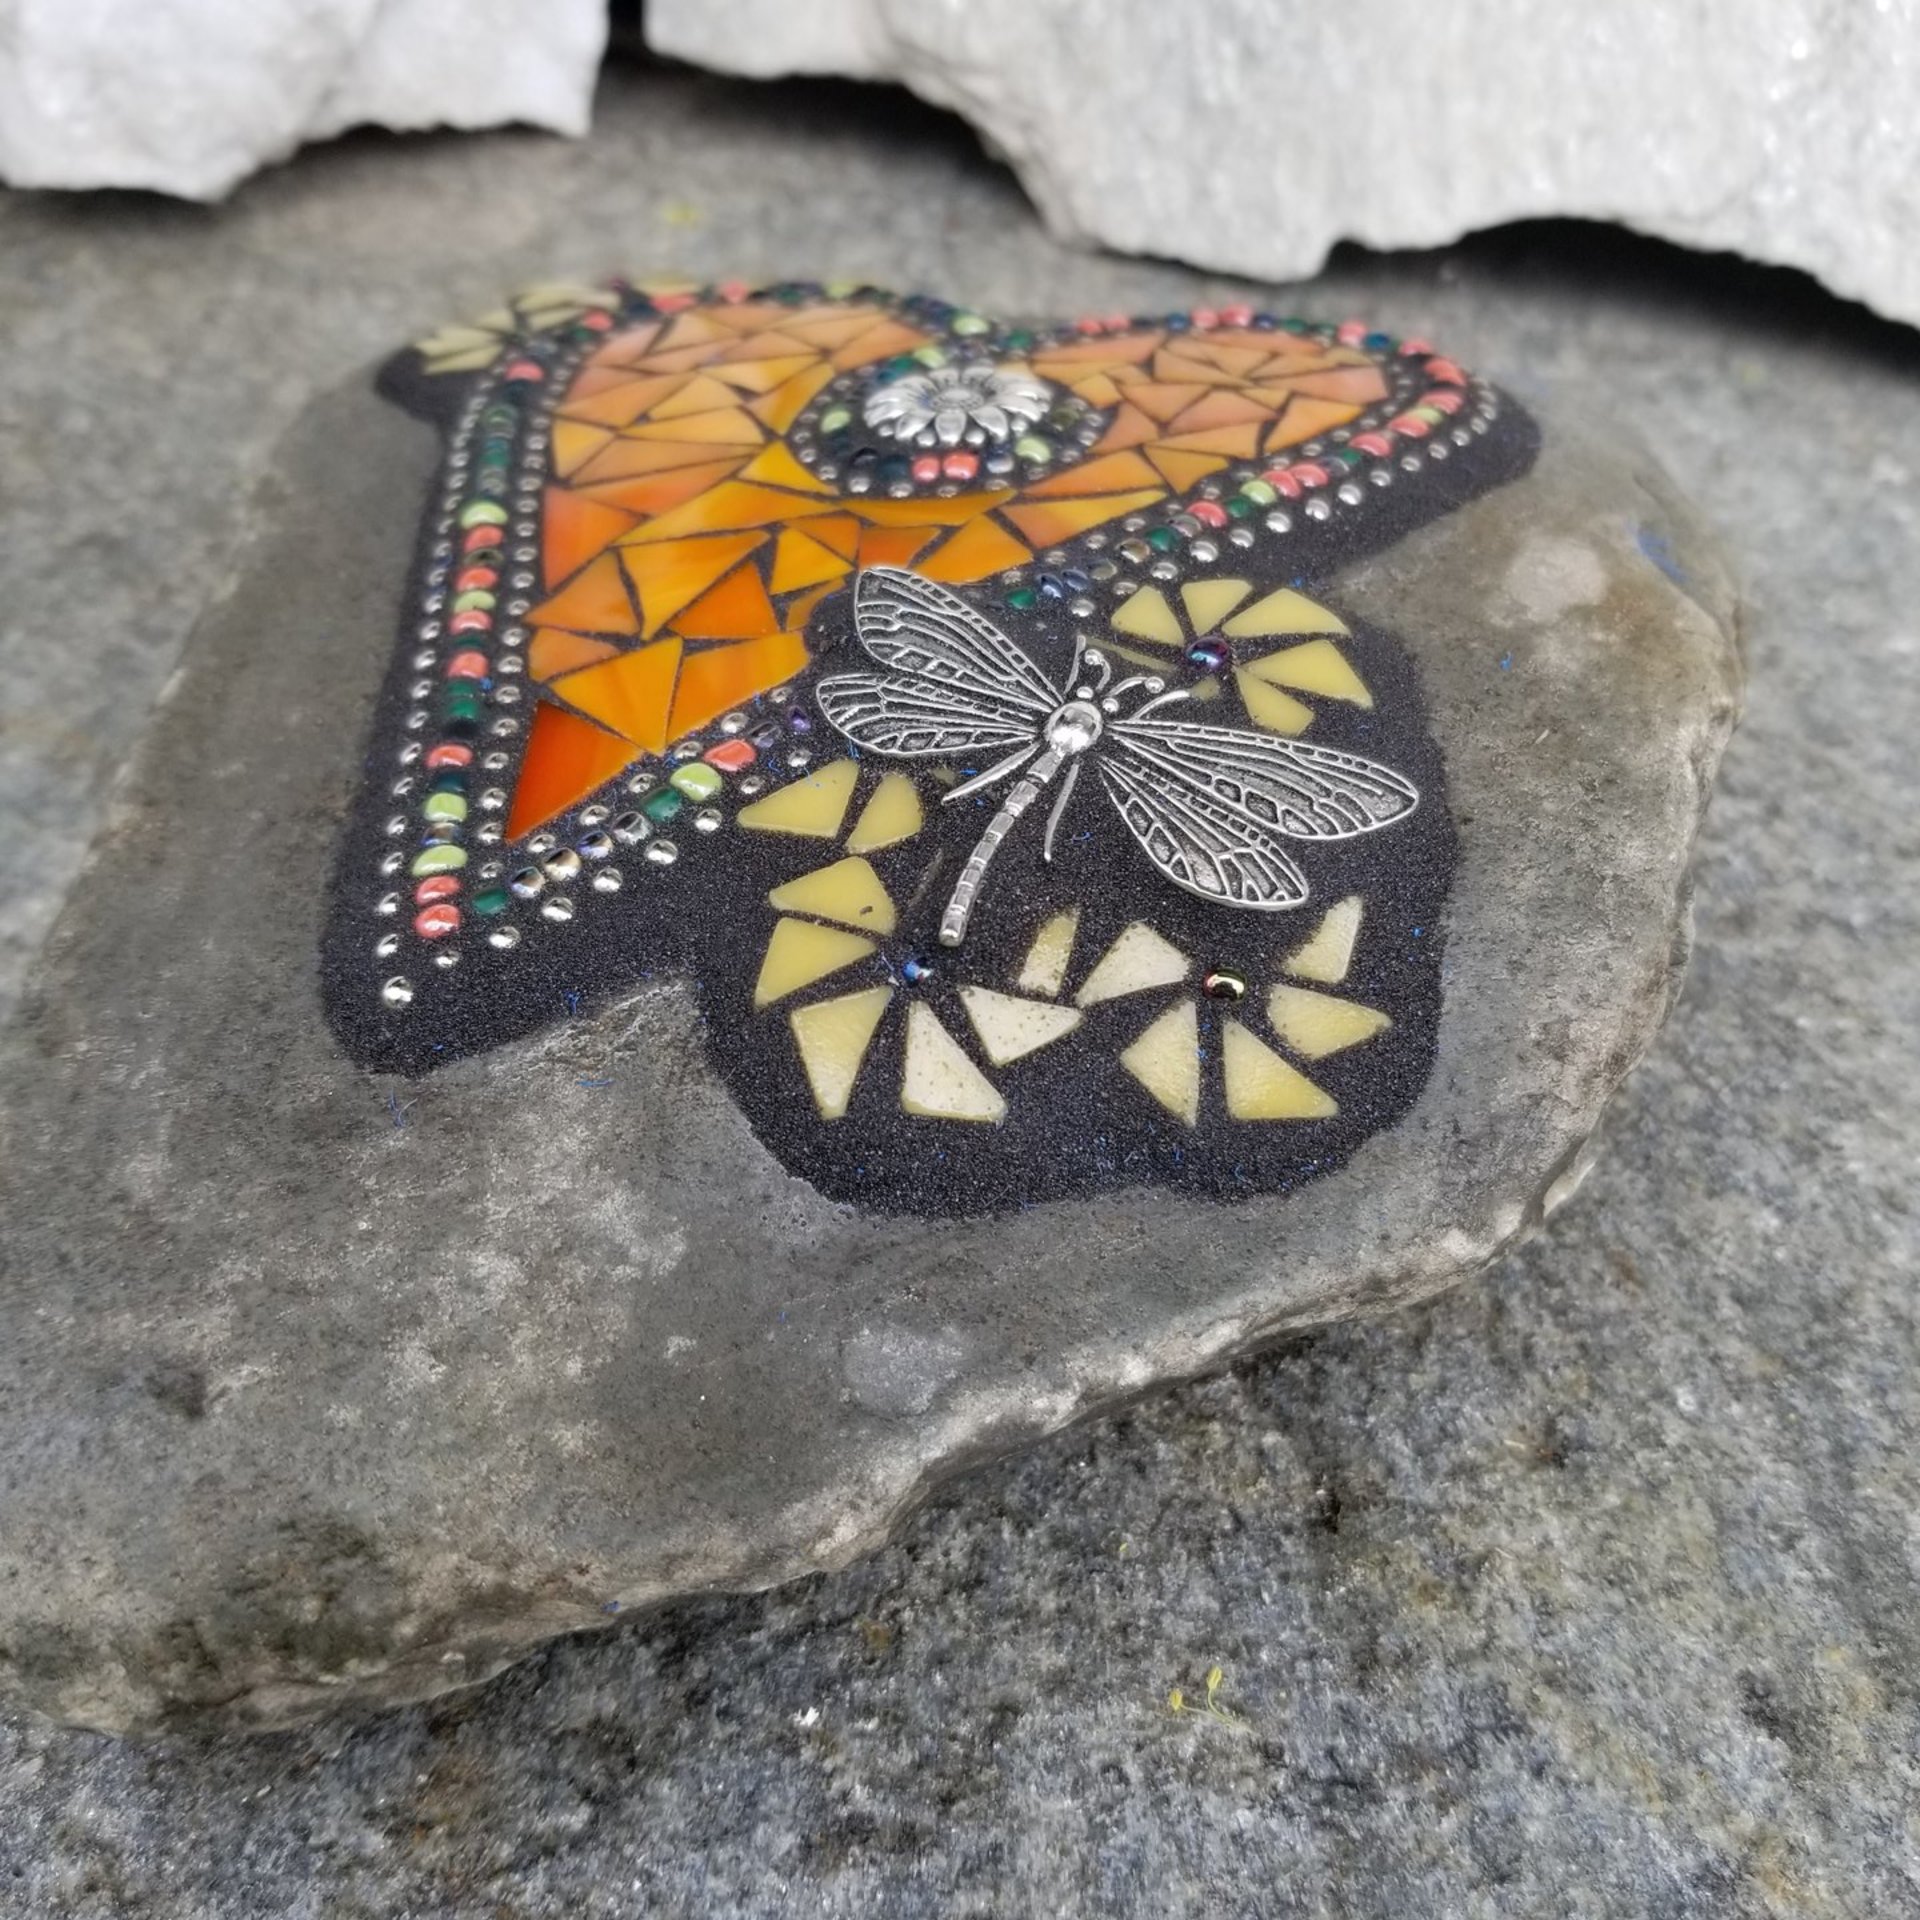 Orange Mosaic Heart Garden Stone with Yellow Pinwheel Flowers